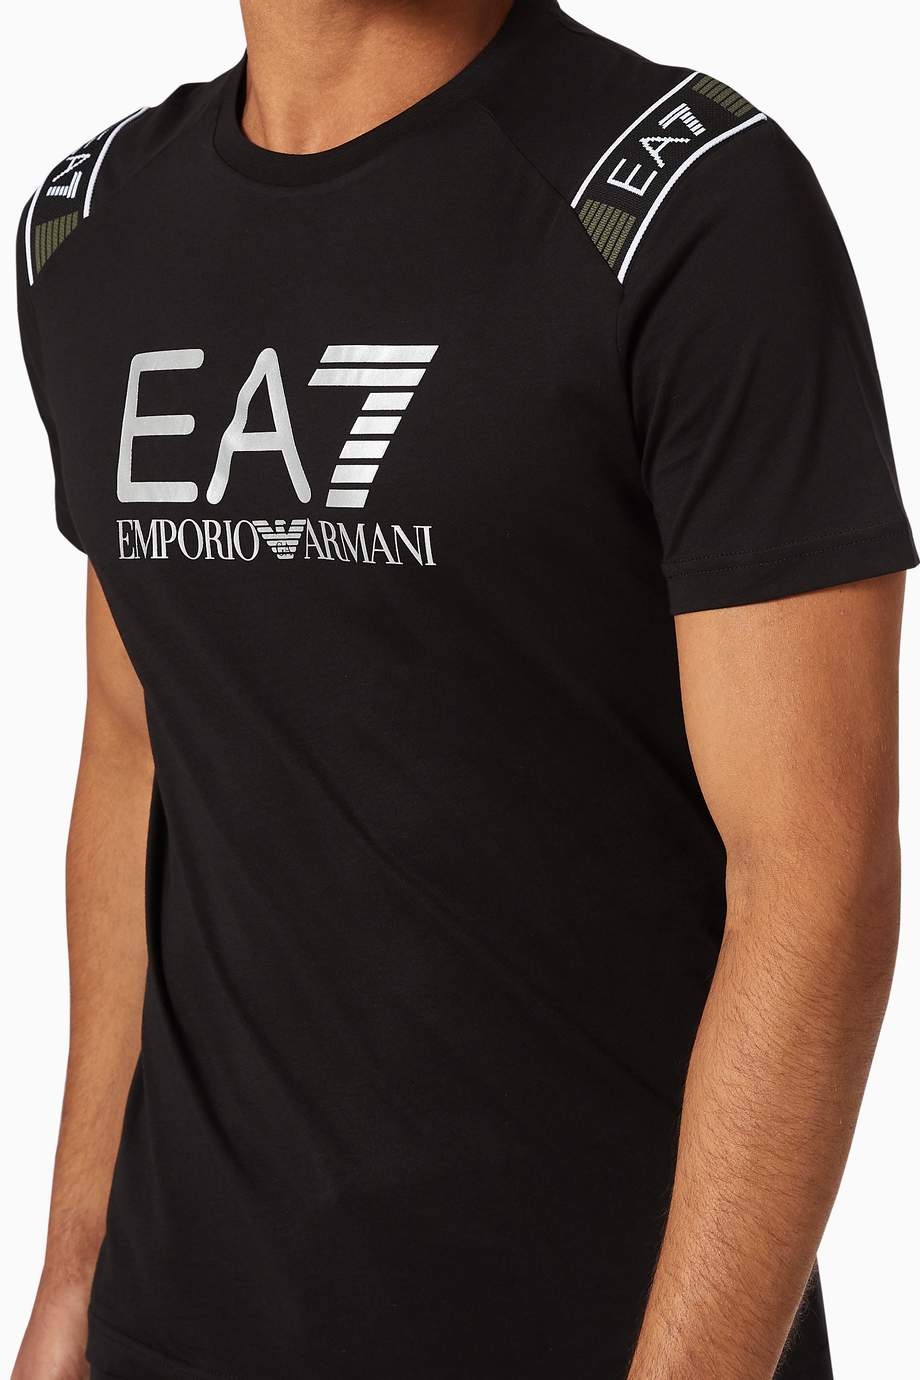 Shop Emporio Armani Black EA7 Tennis Club T-Shirt for Men | Ounass UAE